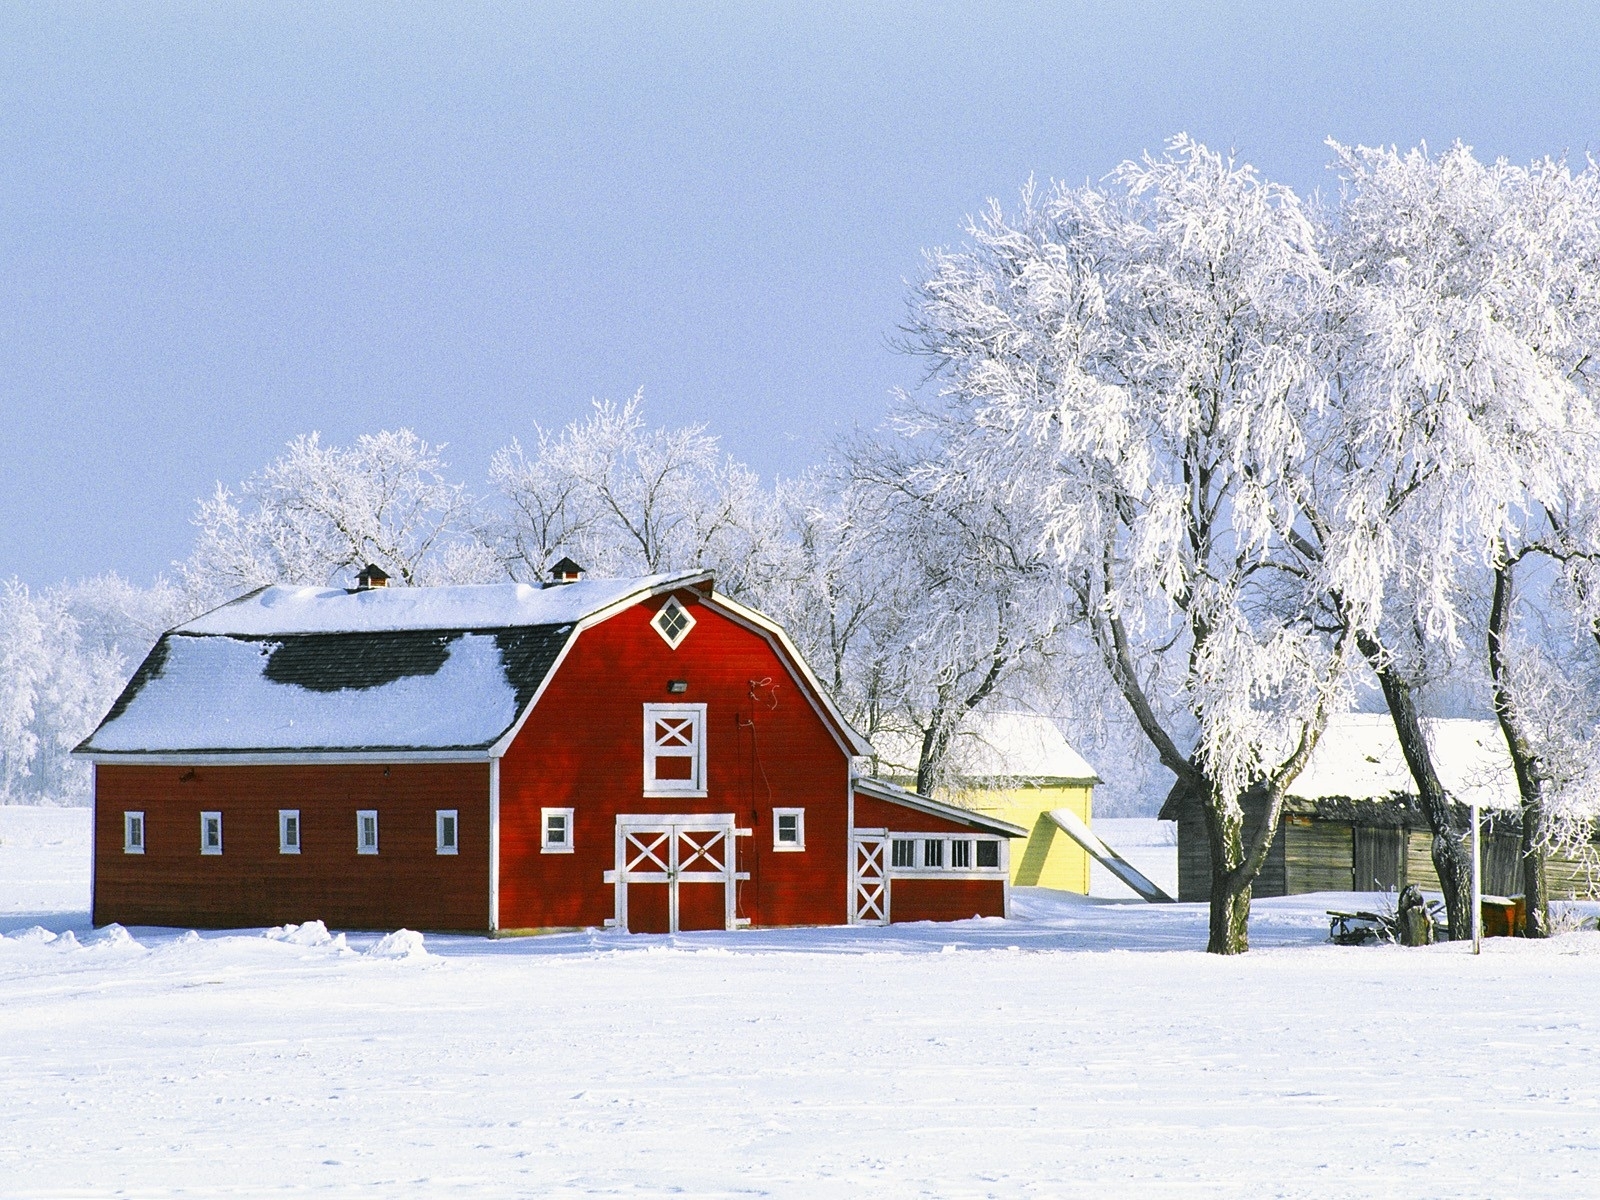 Red Barn in Snow Wallpaper. Snow Wallpaper, Snow White Wallpaper and Snow Desktop Wallpaper